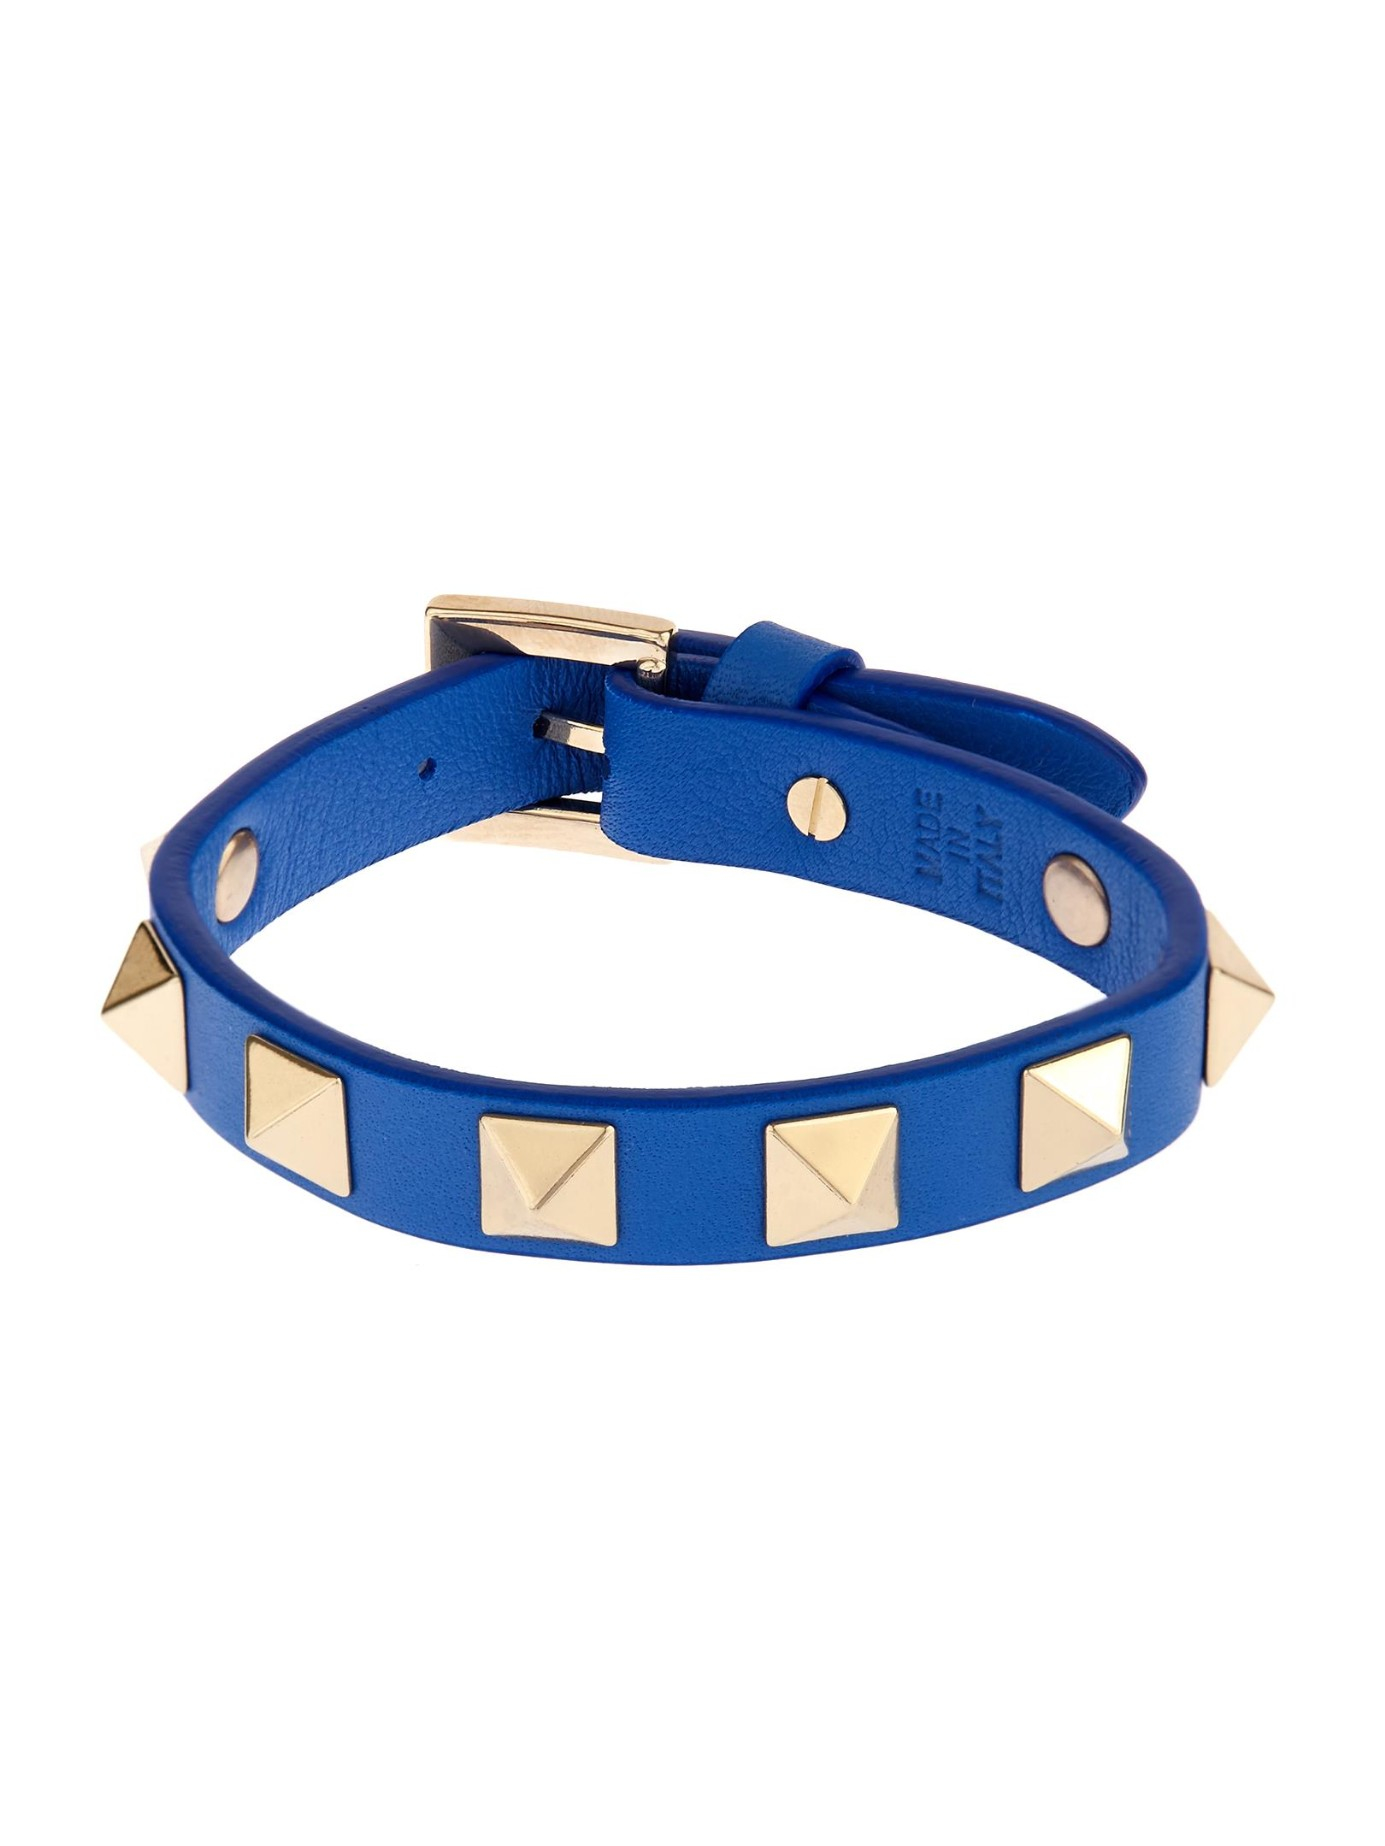 Valentino Rockstud Leather Bracelet in Blue - Lyst